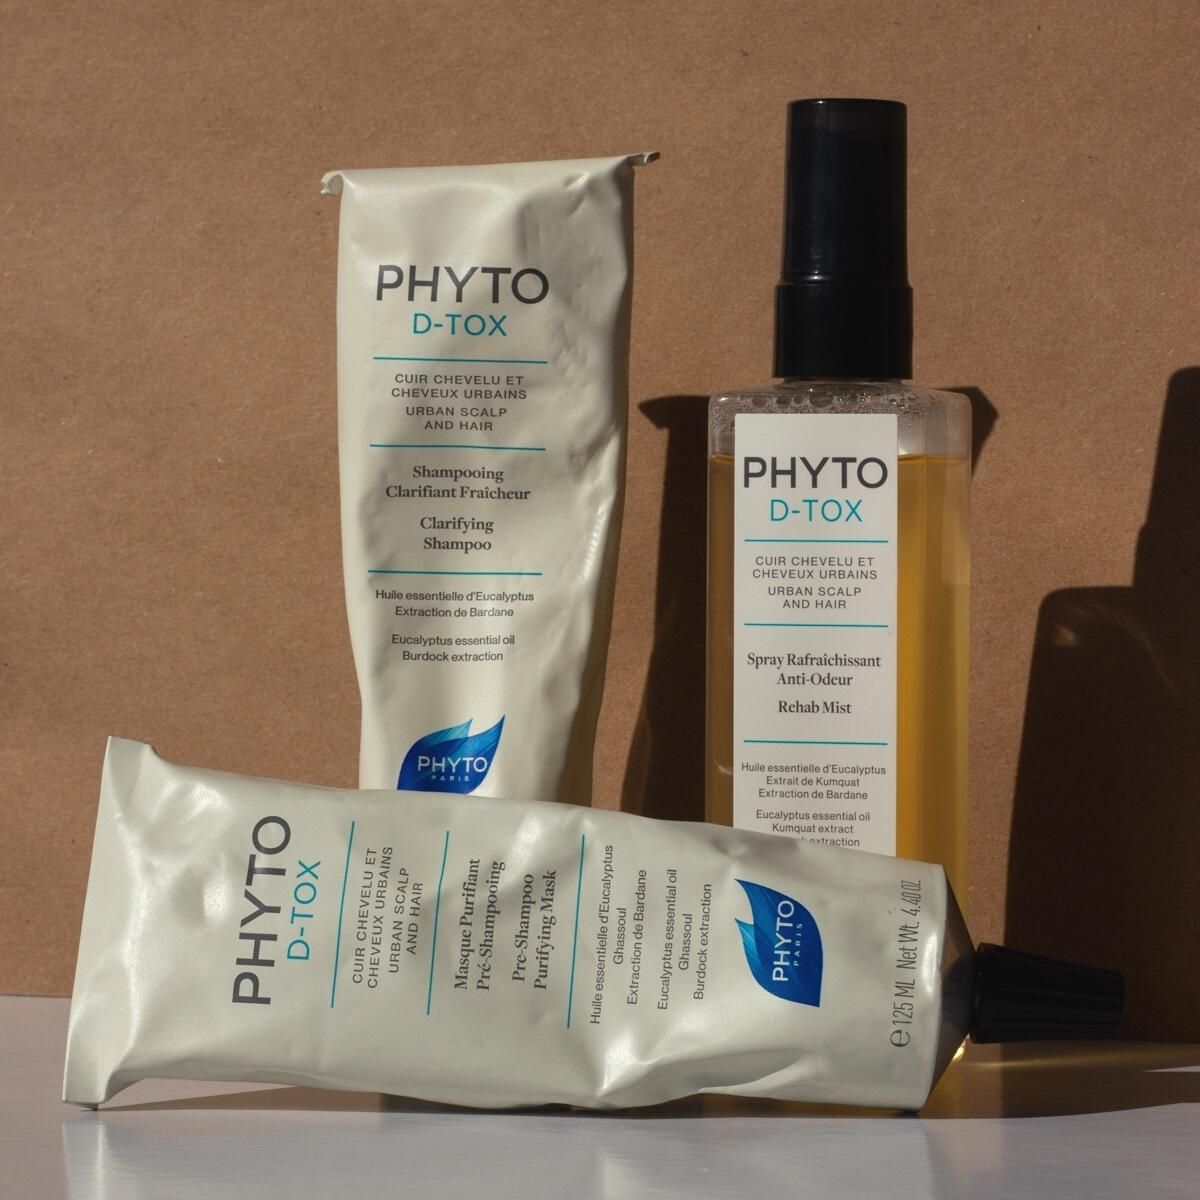 PHYTOD-TOX Pre-Shampoo Purifying Mask